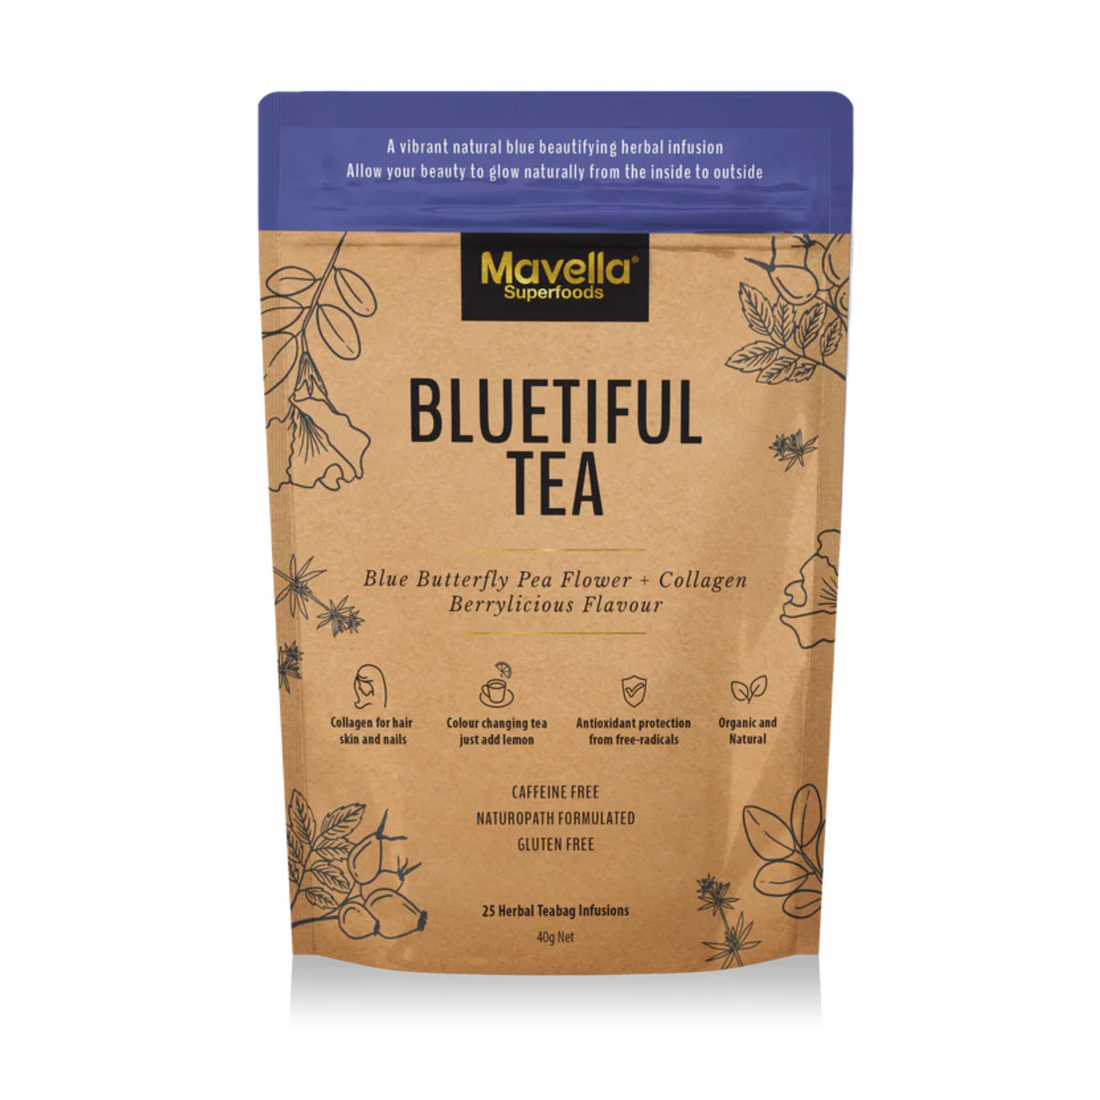 Discover the Refreshing Delight of Mavella Bluetiful Tea